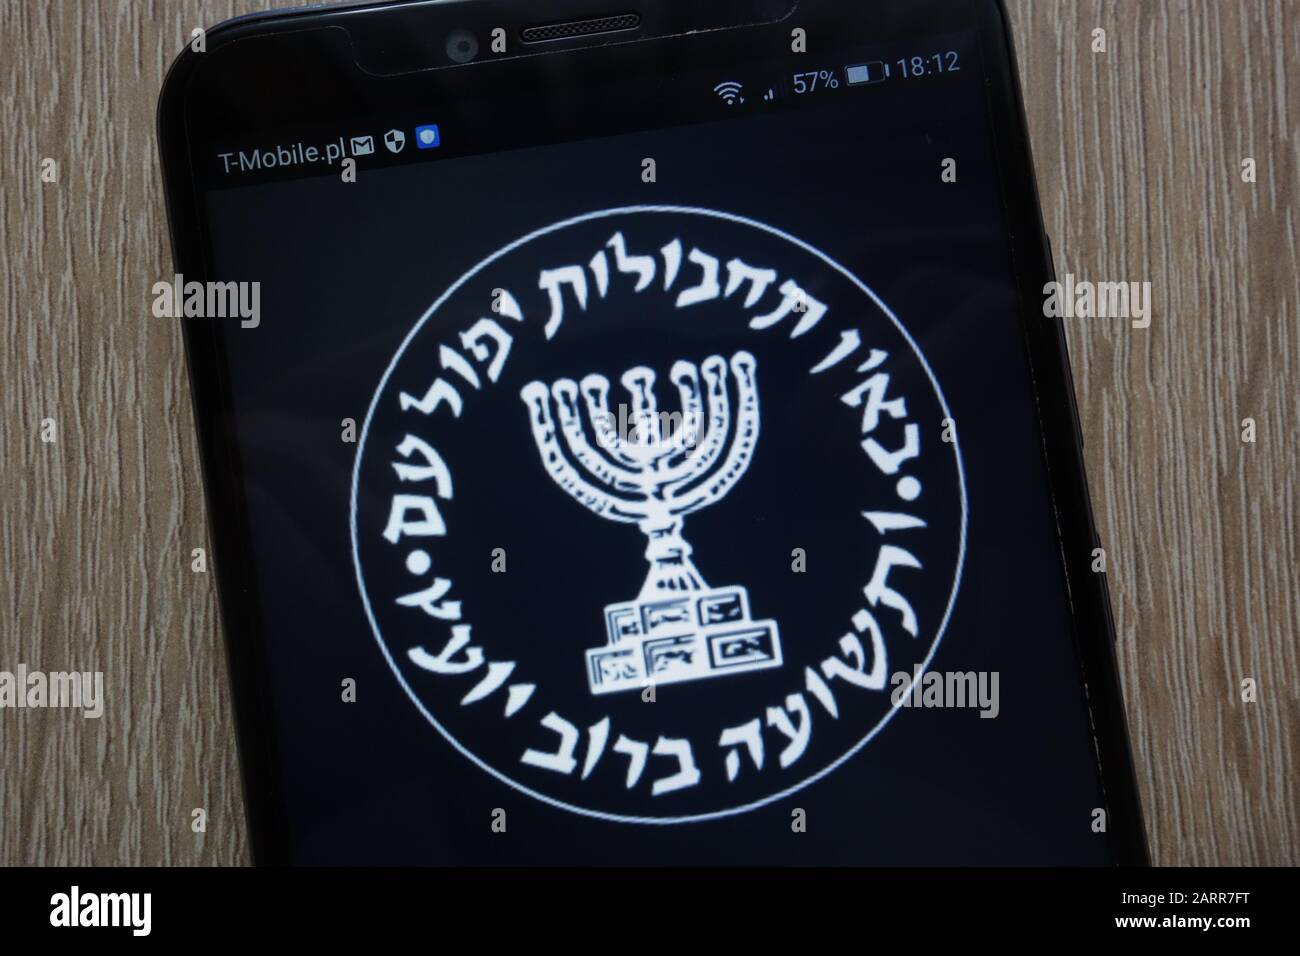 Mossad, Israeli Secret Intelligence Service logo displayed on a modern smartphone Stock Photo